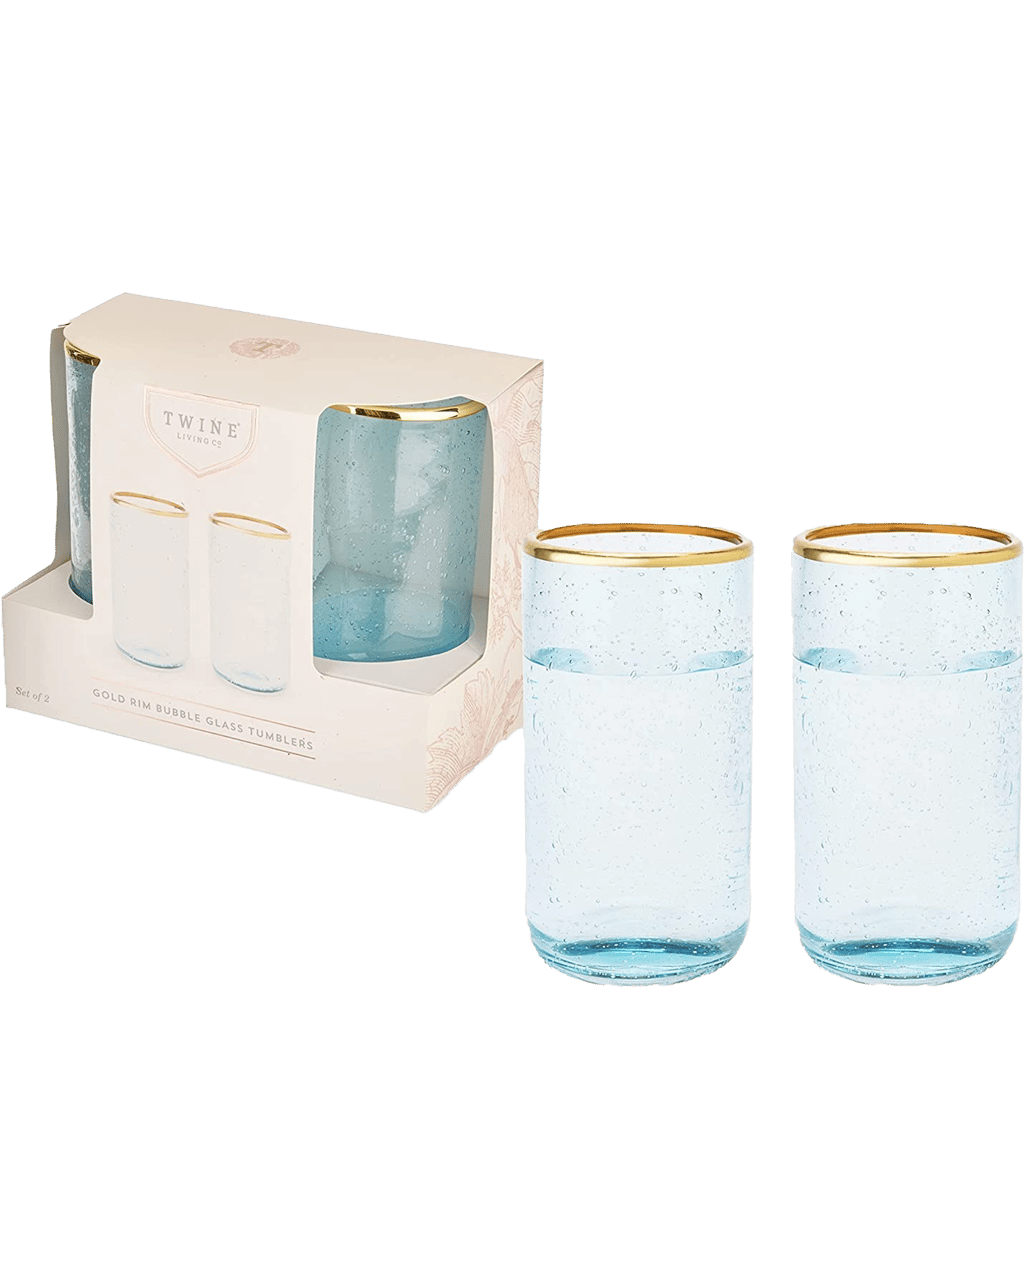 Aqua Bubble Glass Tumbler Set by Twine - The Best Wine Store